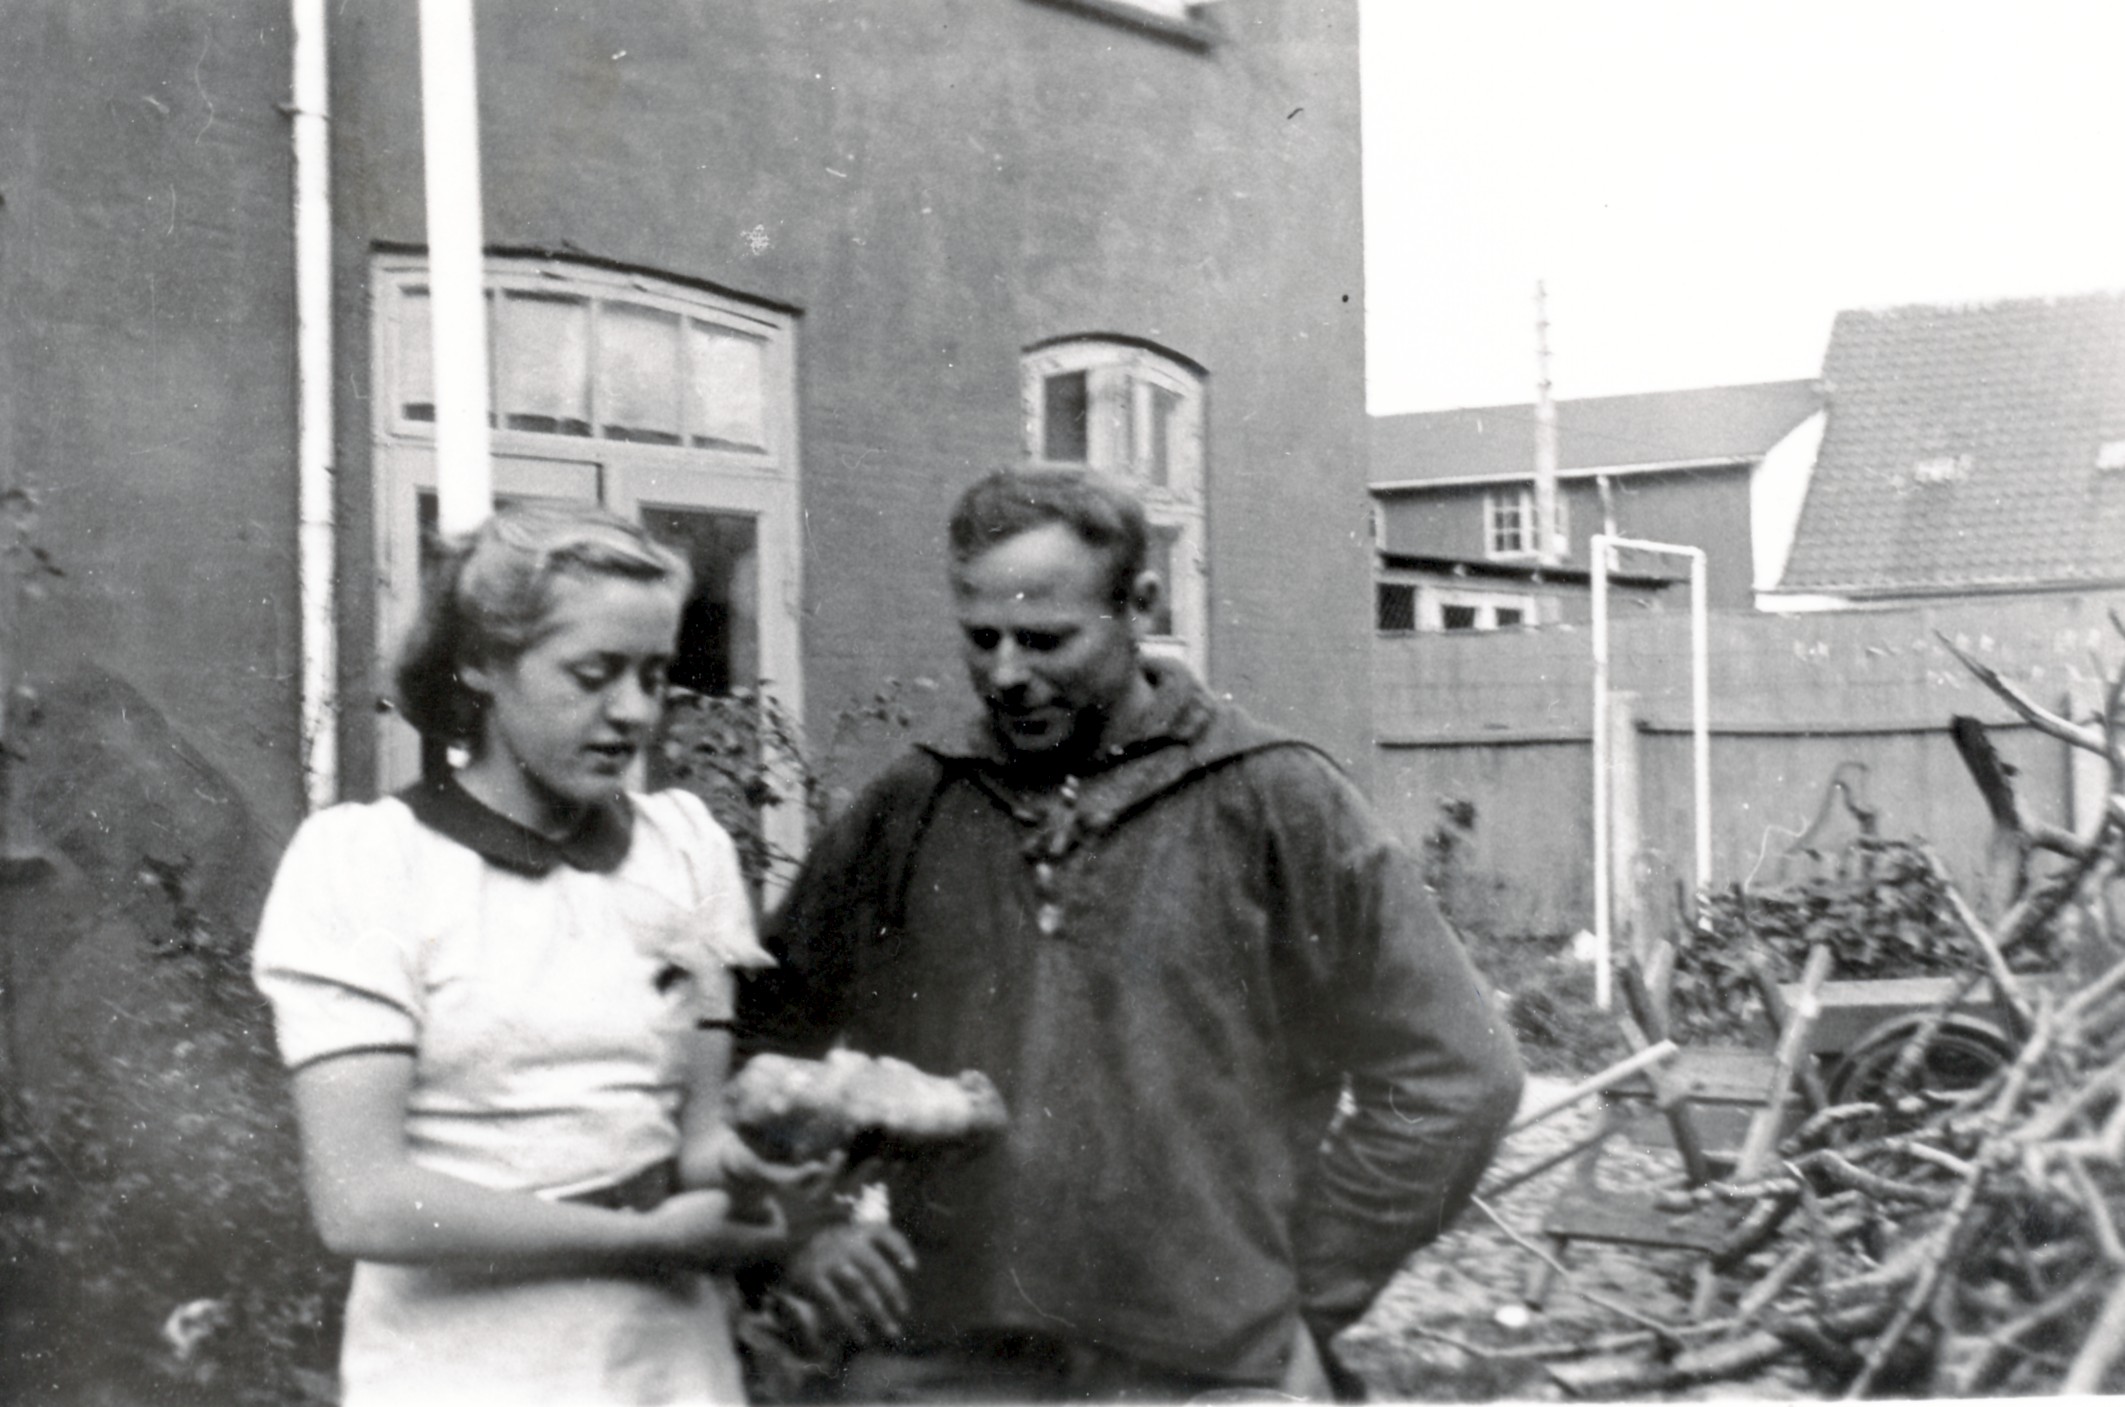 Svend Åge Eriksen, Klint - ca. 1950 (B9840)